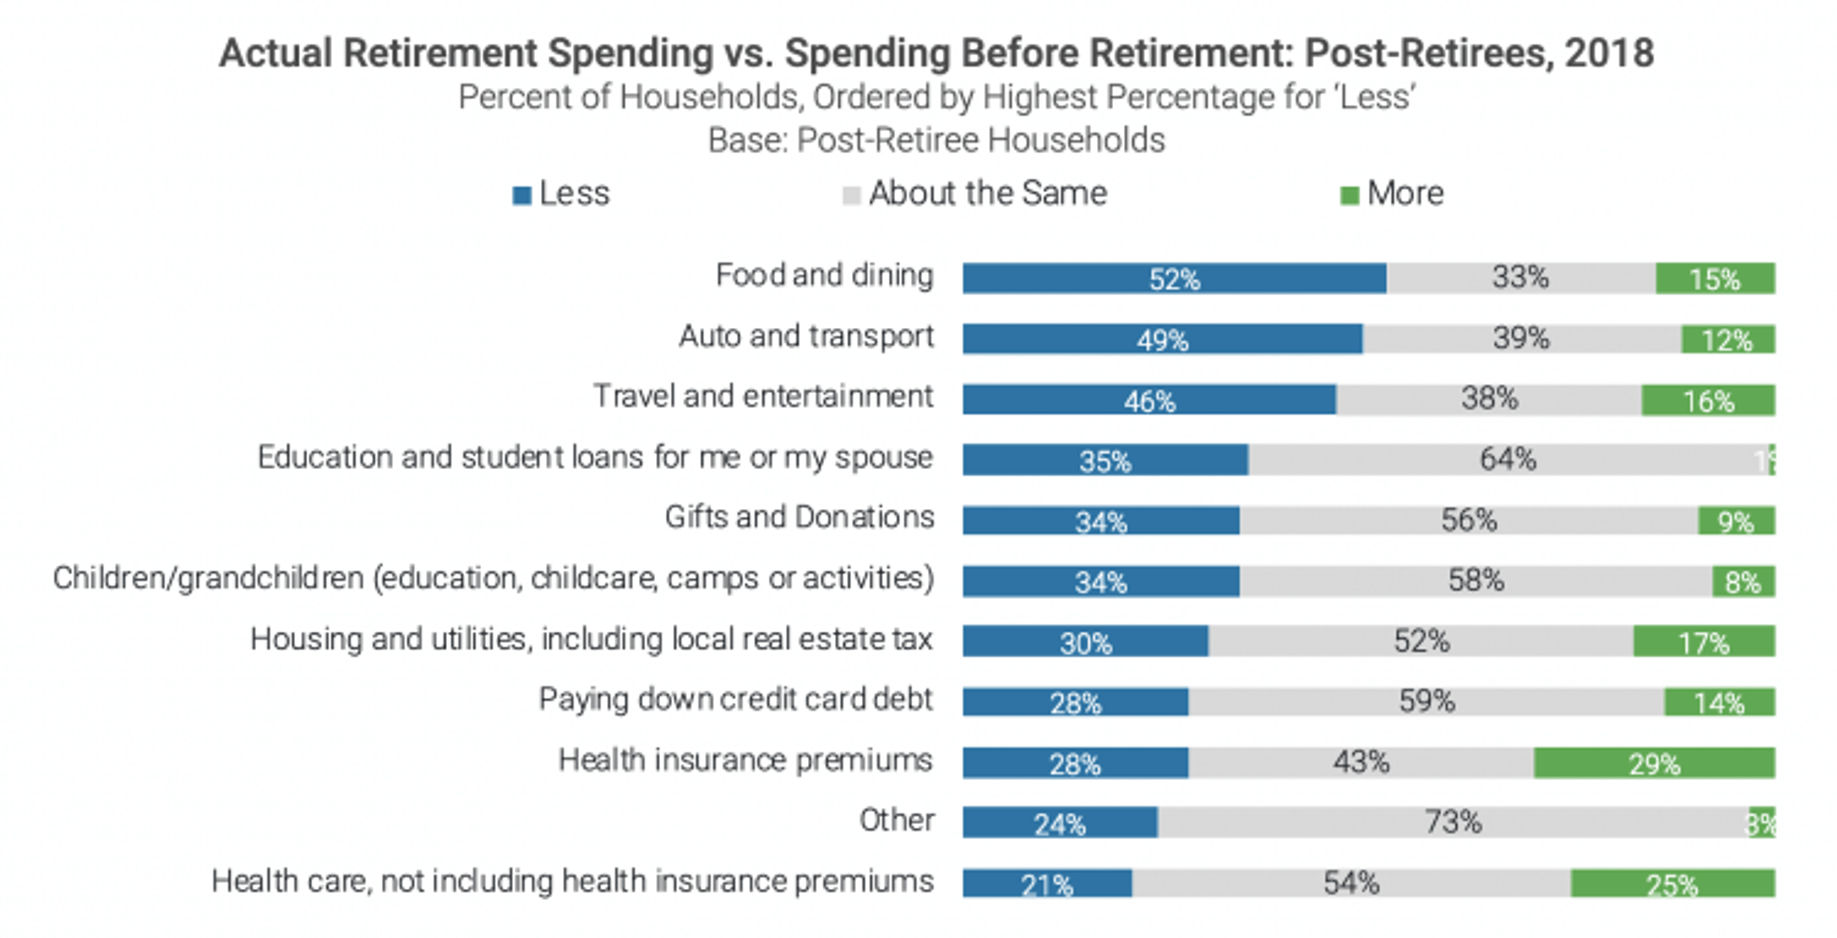 Actual retirement spending vs. spending before retirement data, from 2018